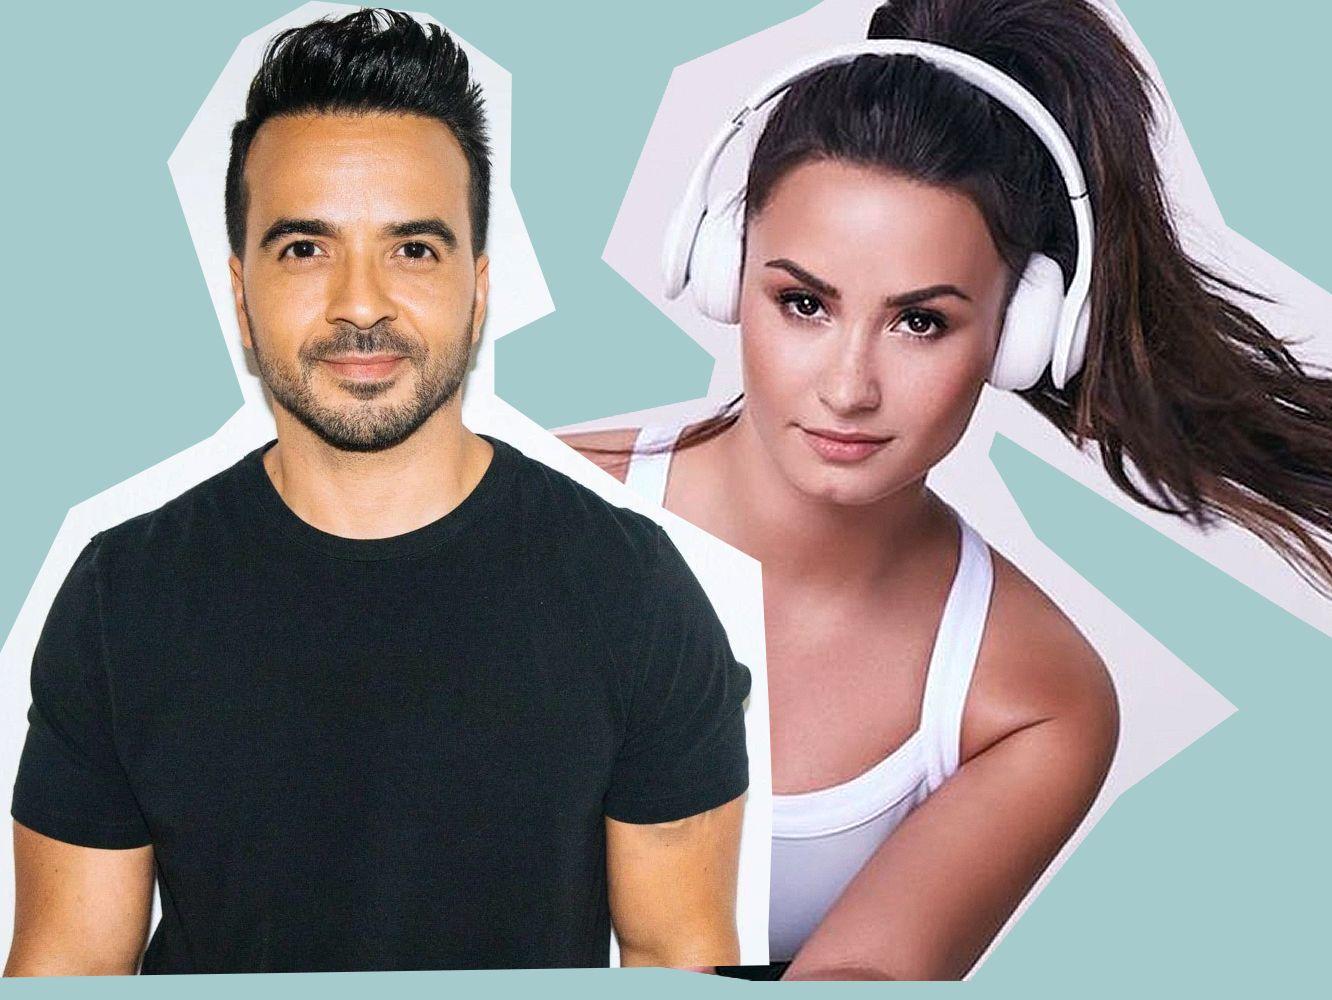 Dal-és klippremier: Luis Fonsi & Demi Lovato La Culpa